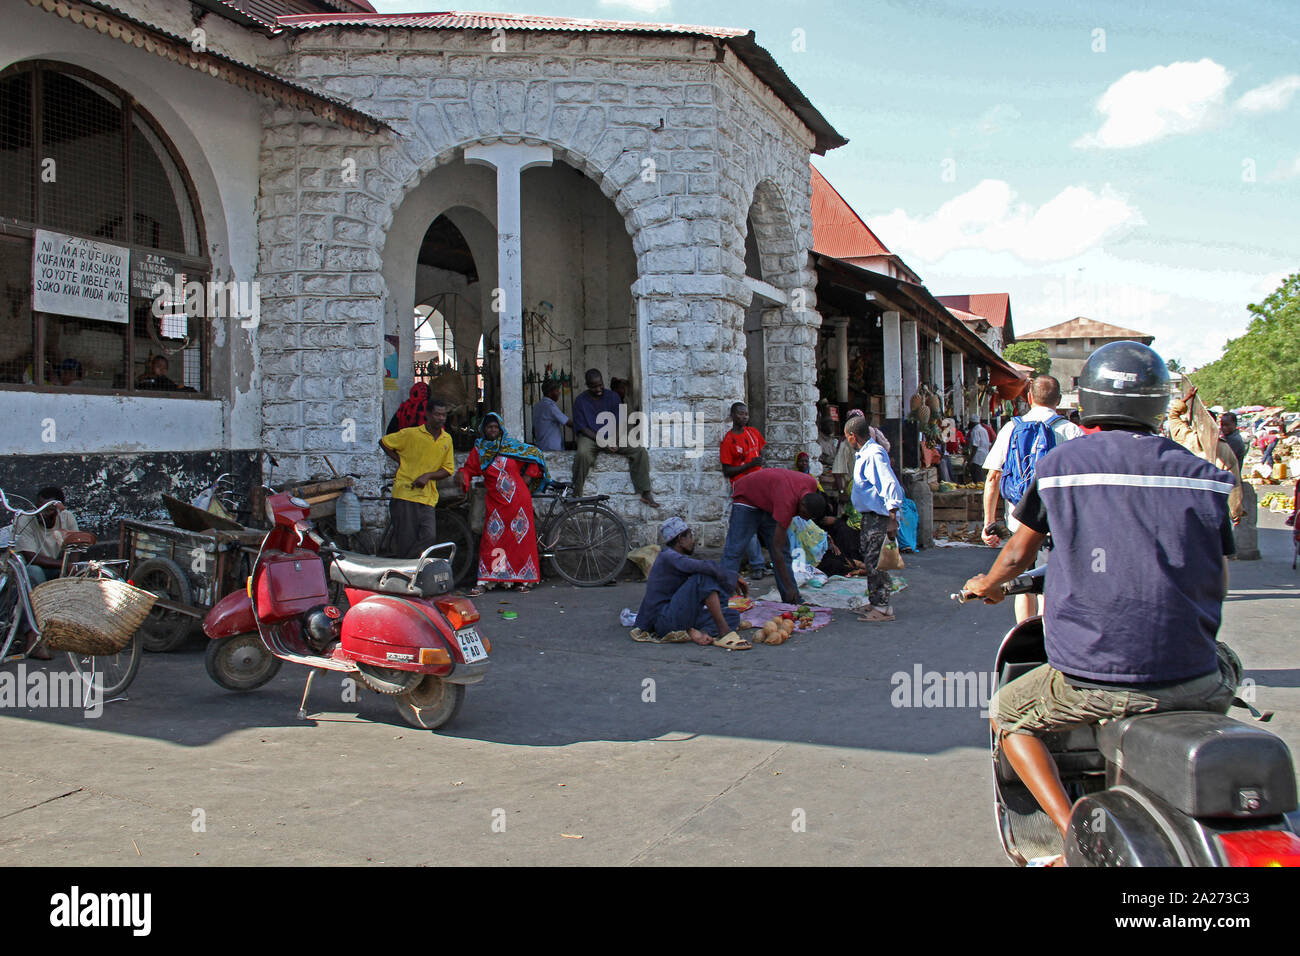 Tourists, motorists and vendors in open street, Stone Town, Zanzibar, Unguja Island, Tanzania. Stock Photo